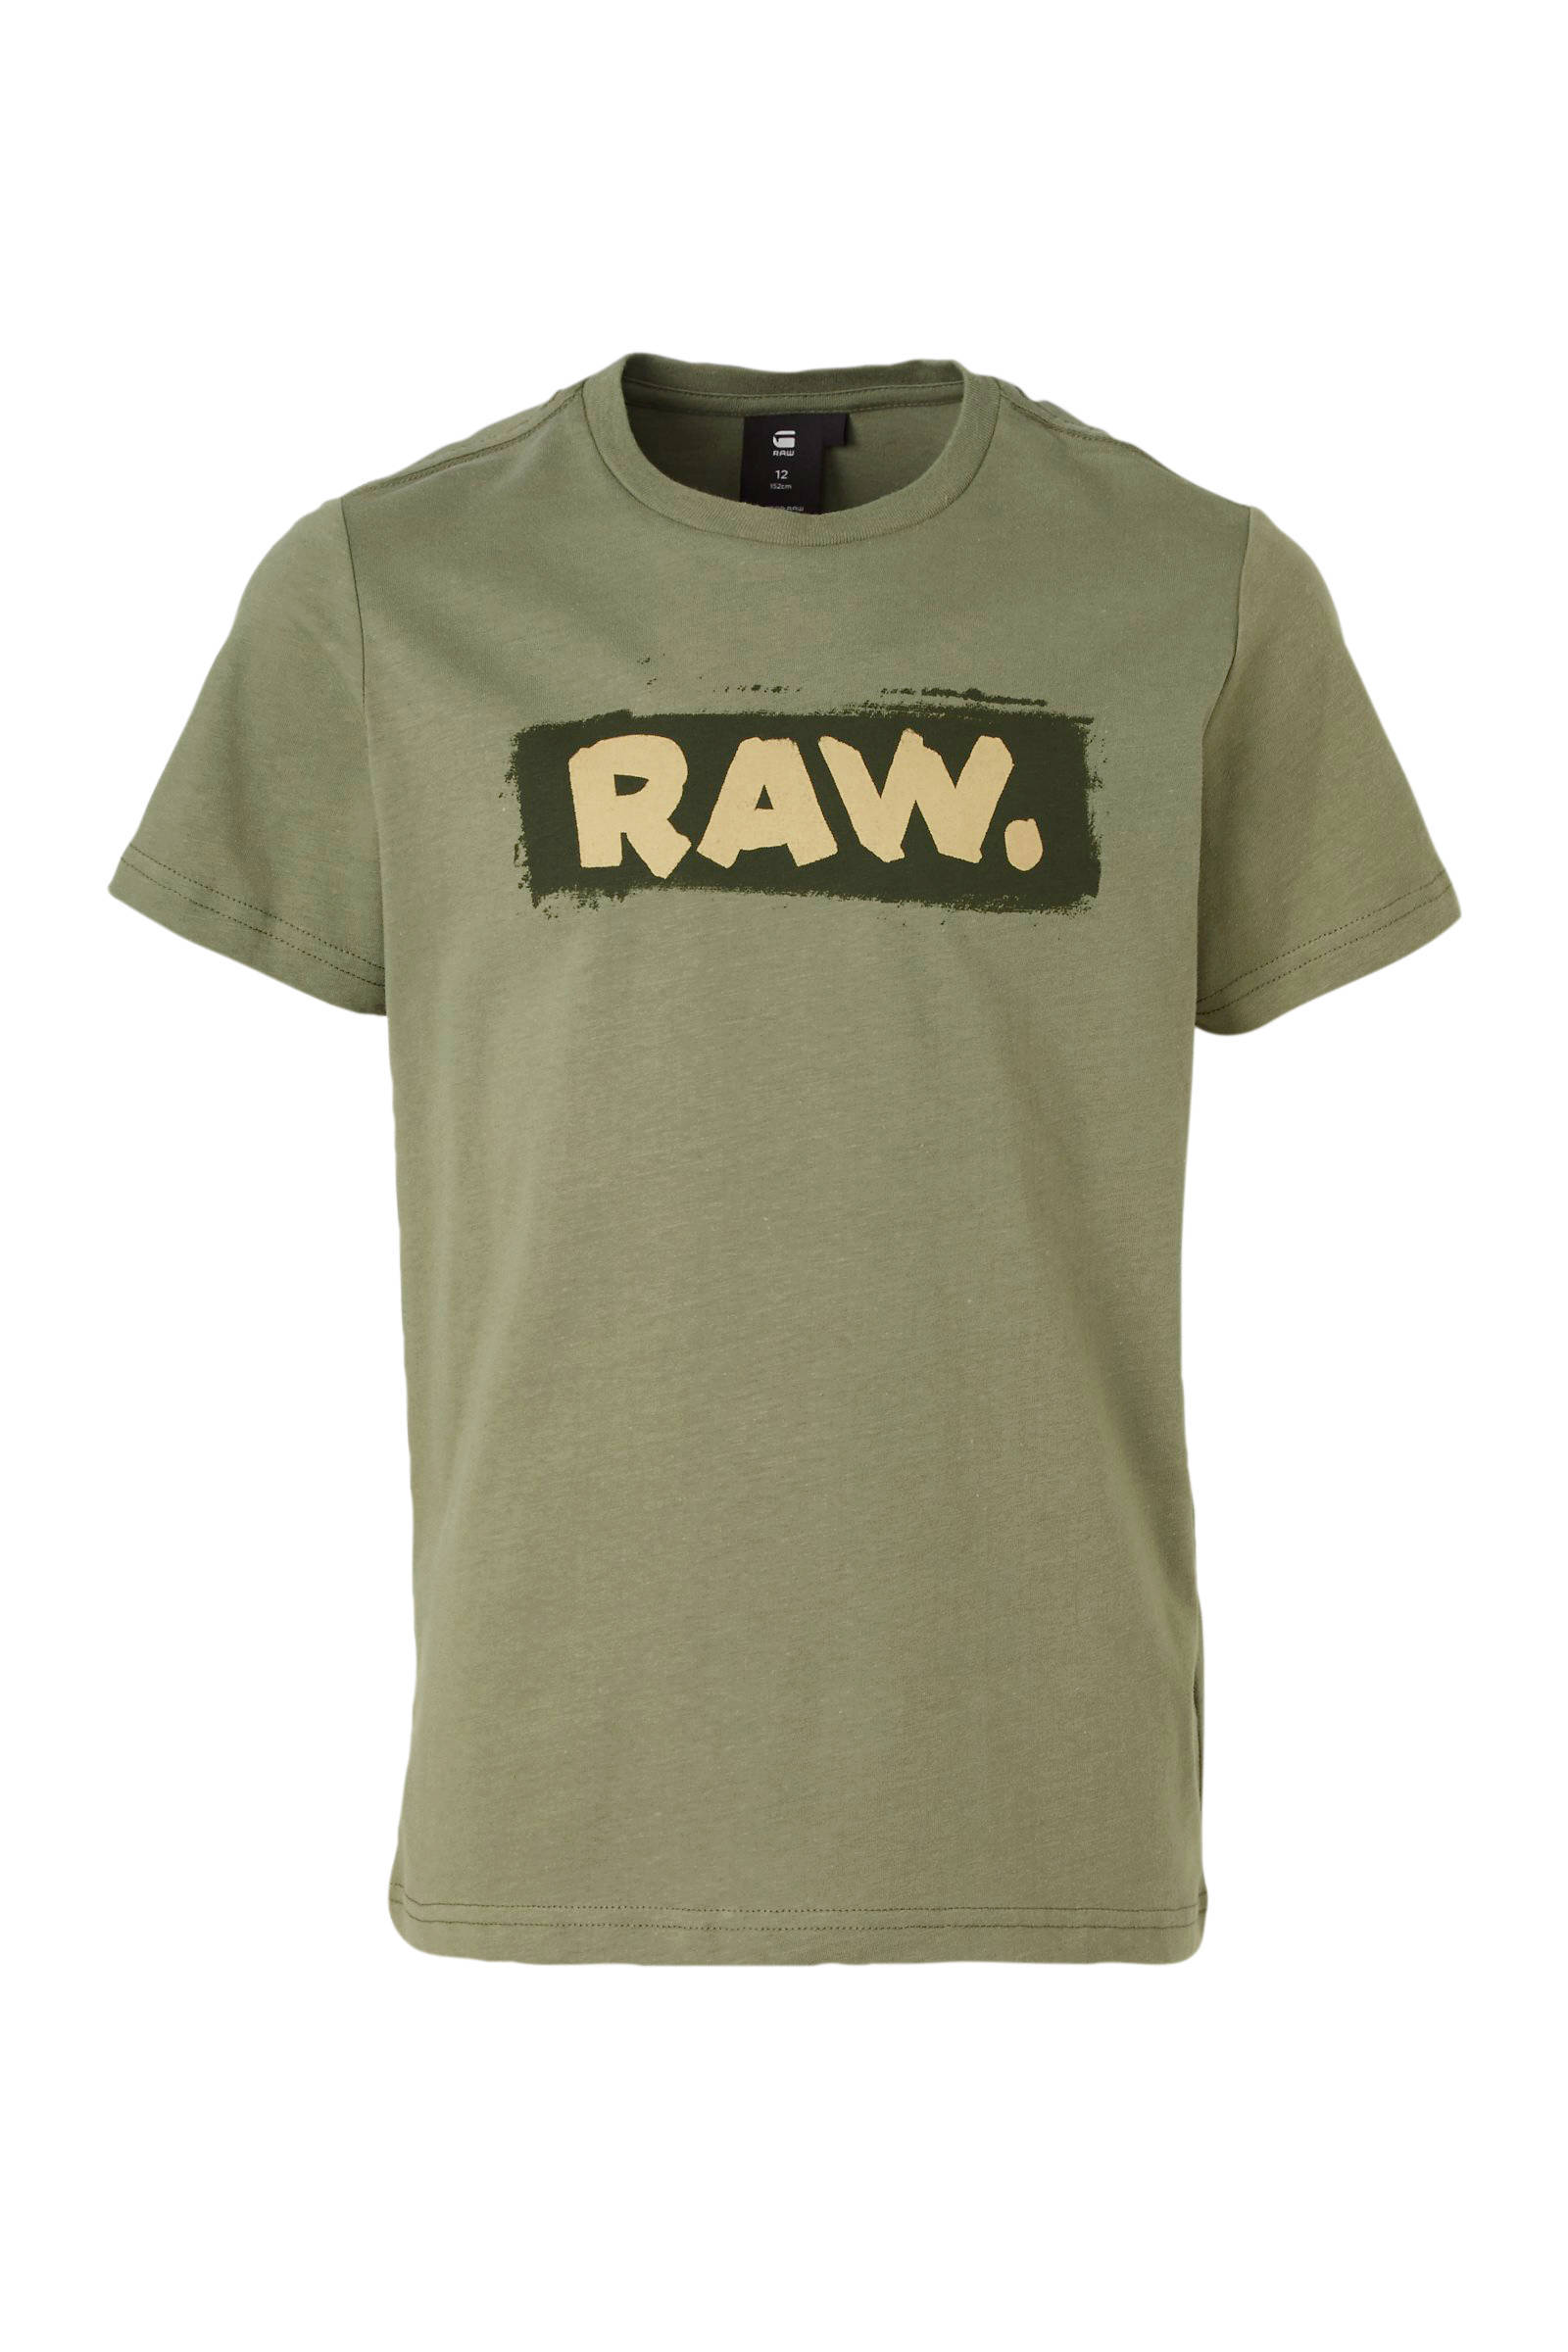 raw shirt